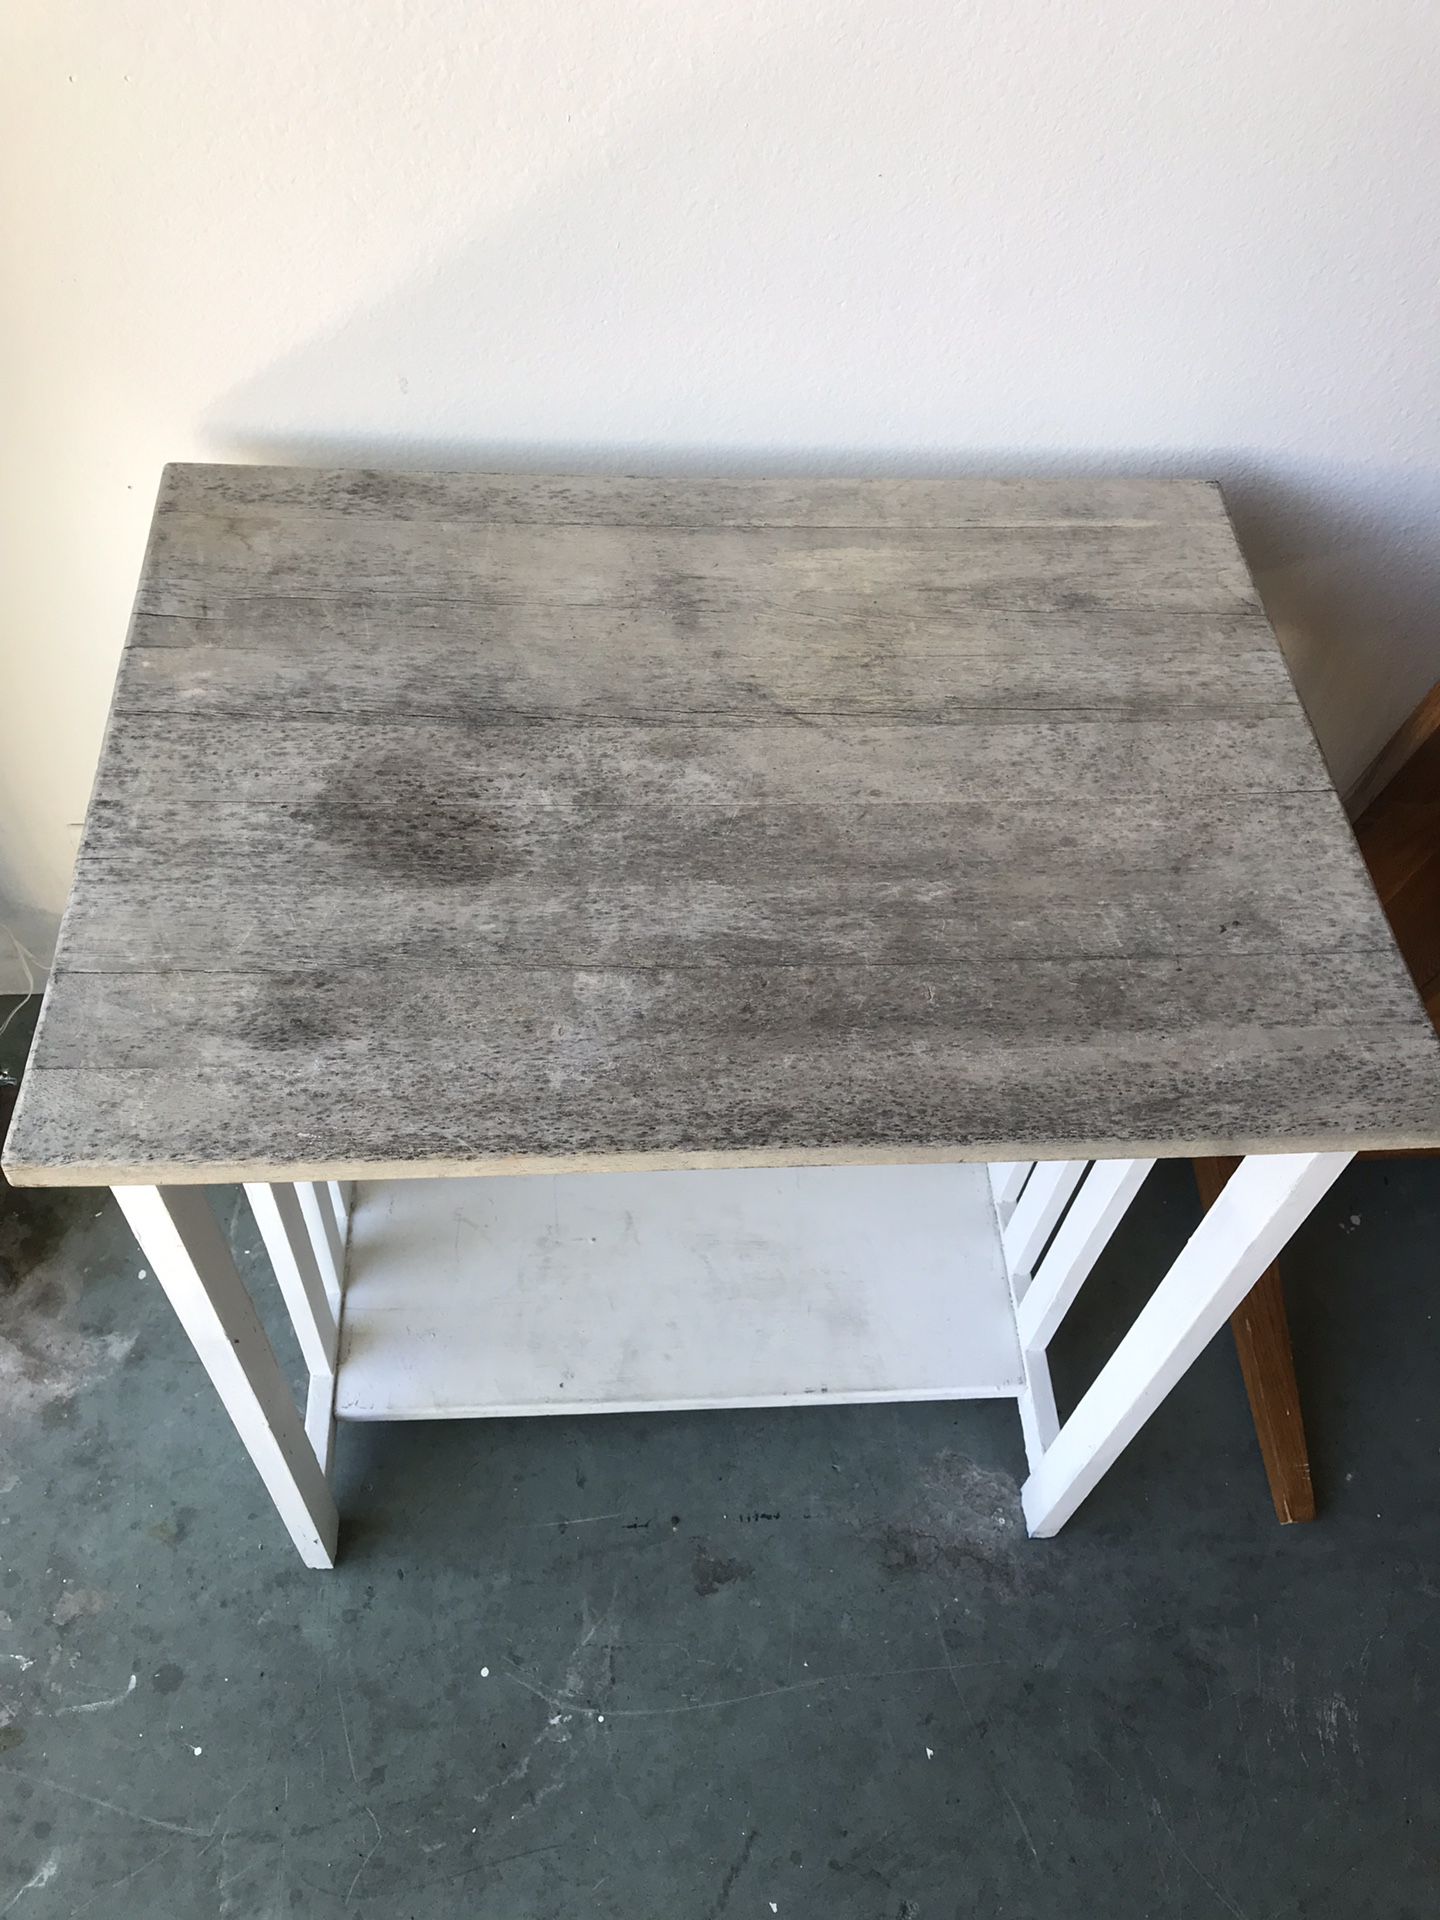 Reclaimed wood desk / work table